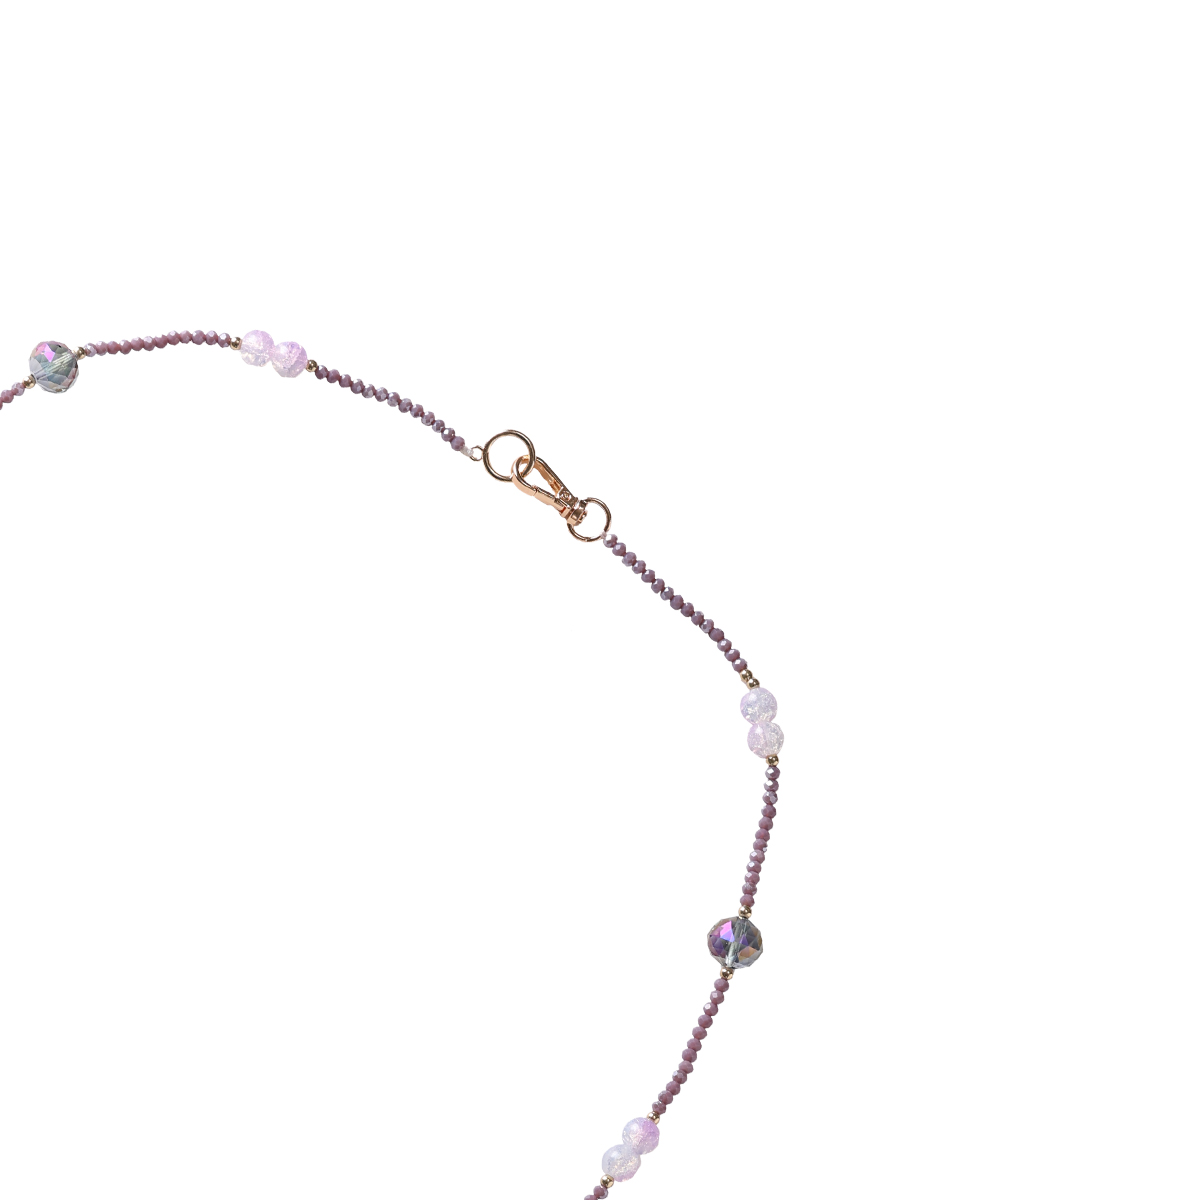 100cm Beads variety Halskette